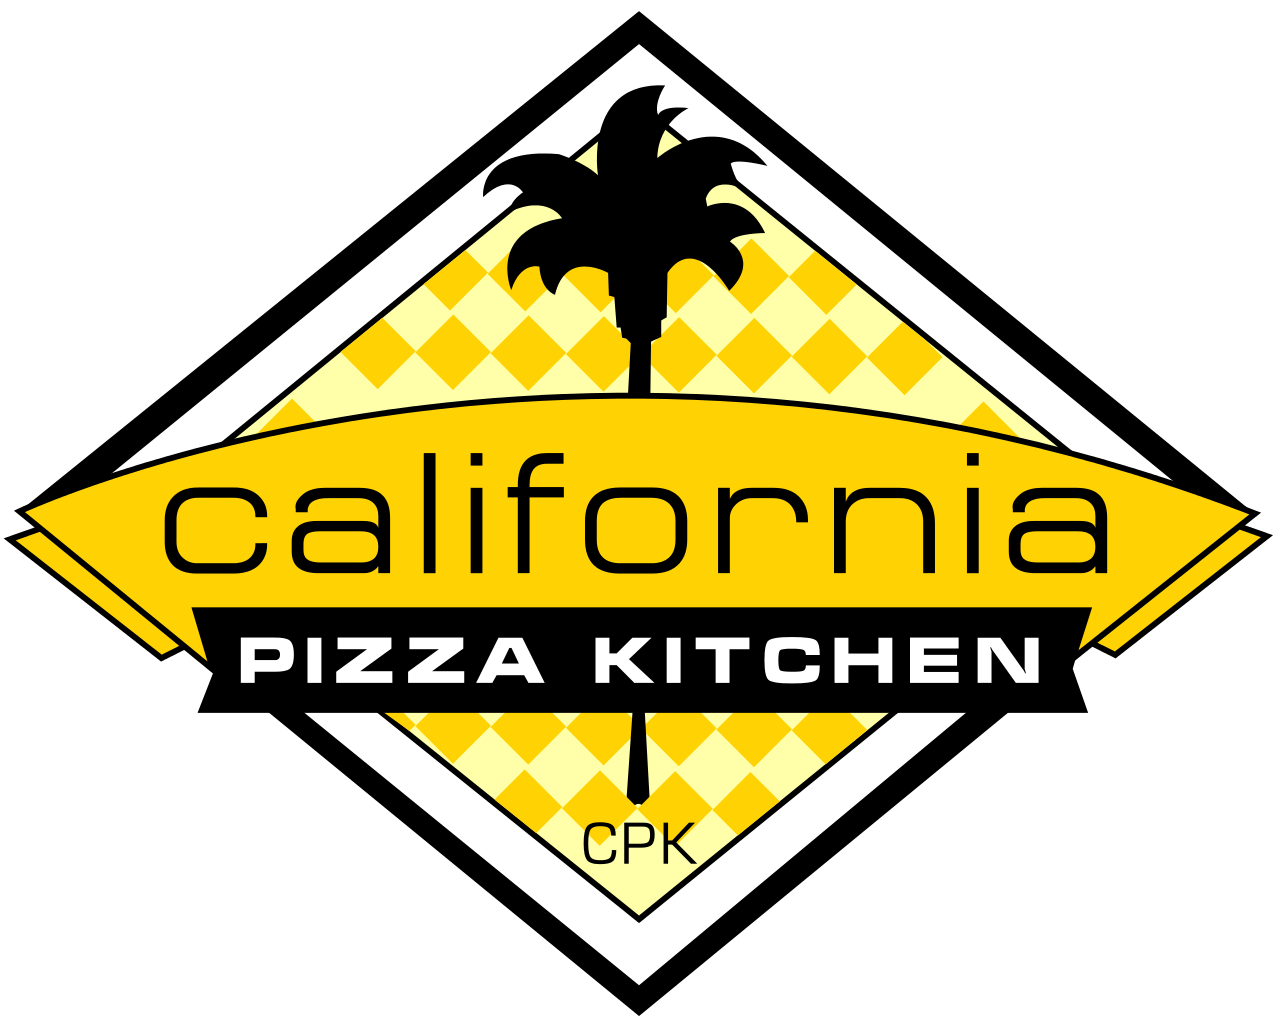 California Pizza Kitchen - Wikipedia, the free encyclopedia